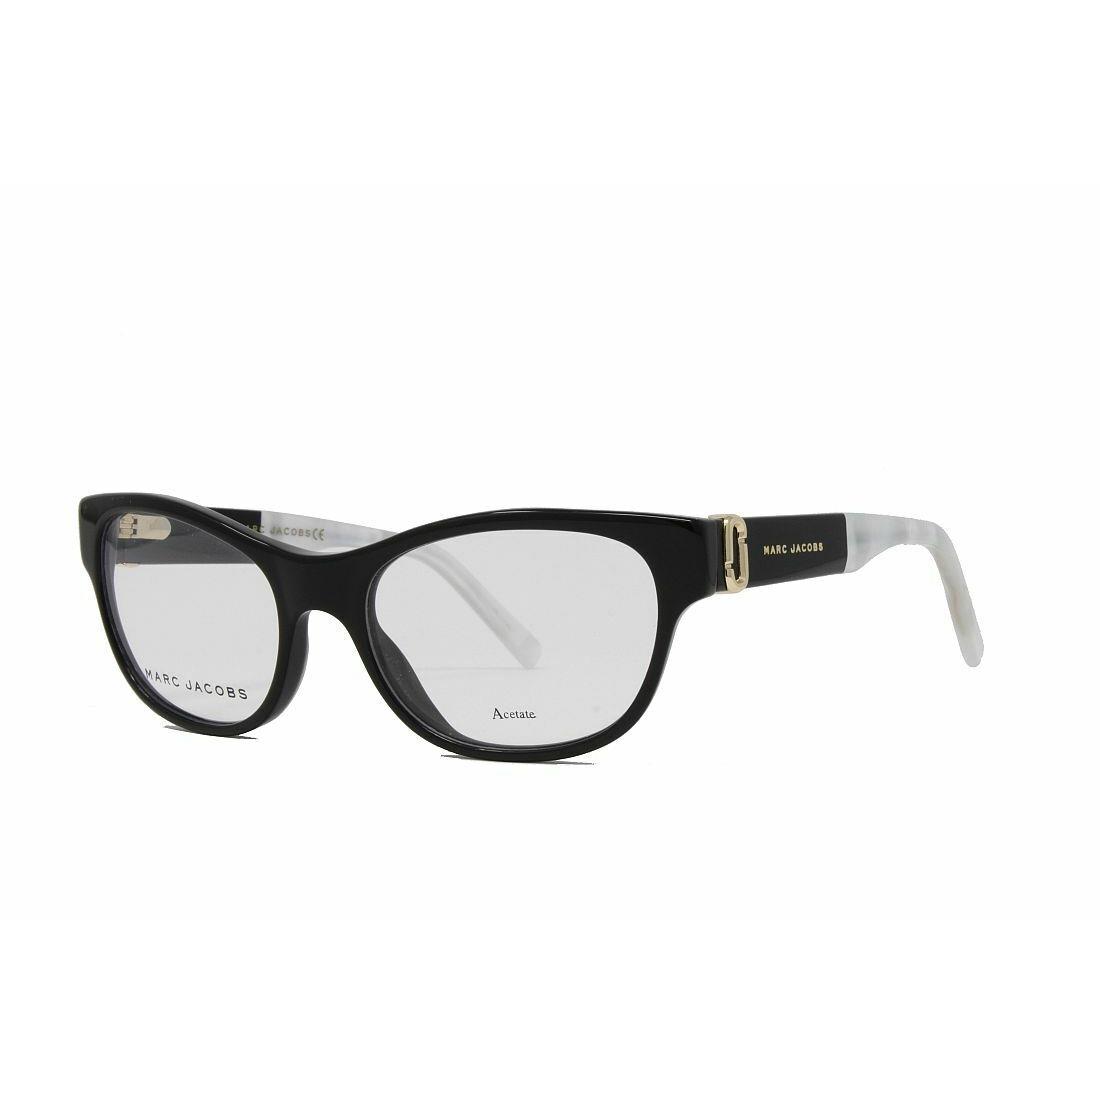 Marc Jacobs Women`s Cat Eye Eyeglasses 251 Color 807 Black Size 52-18-140 - Black Frame